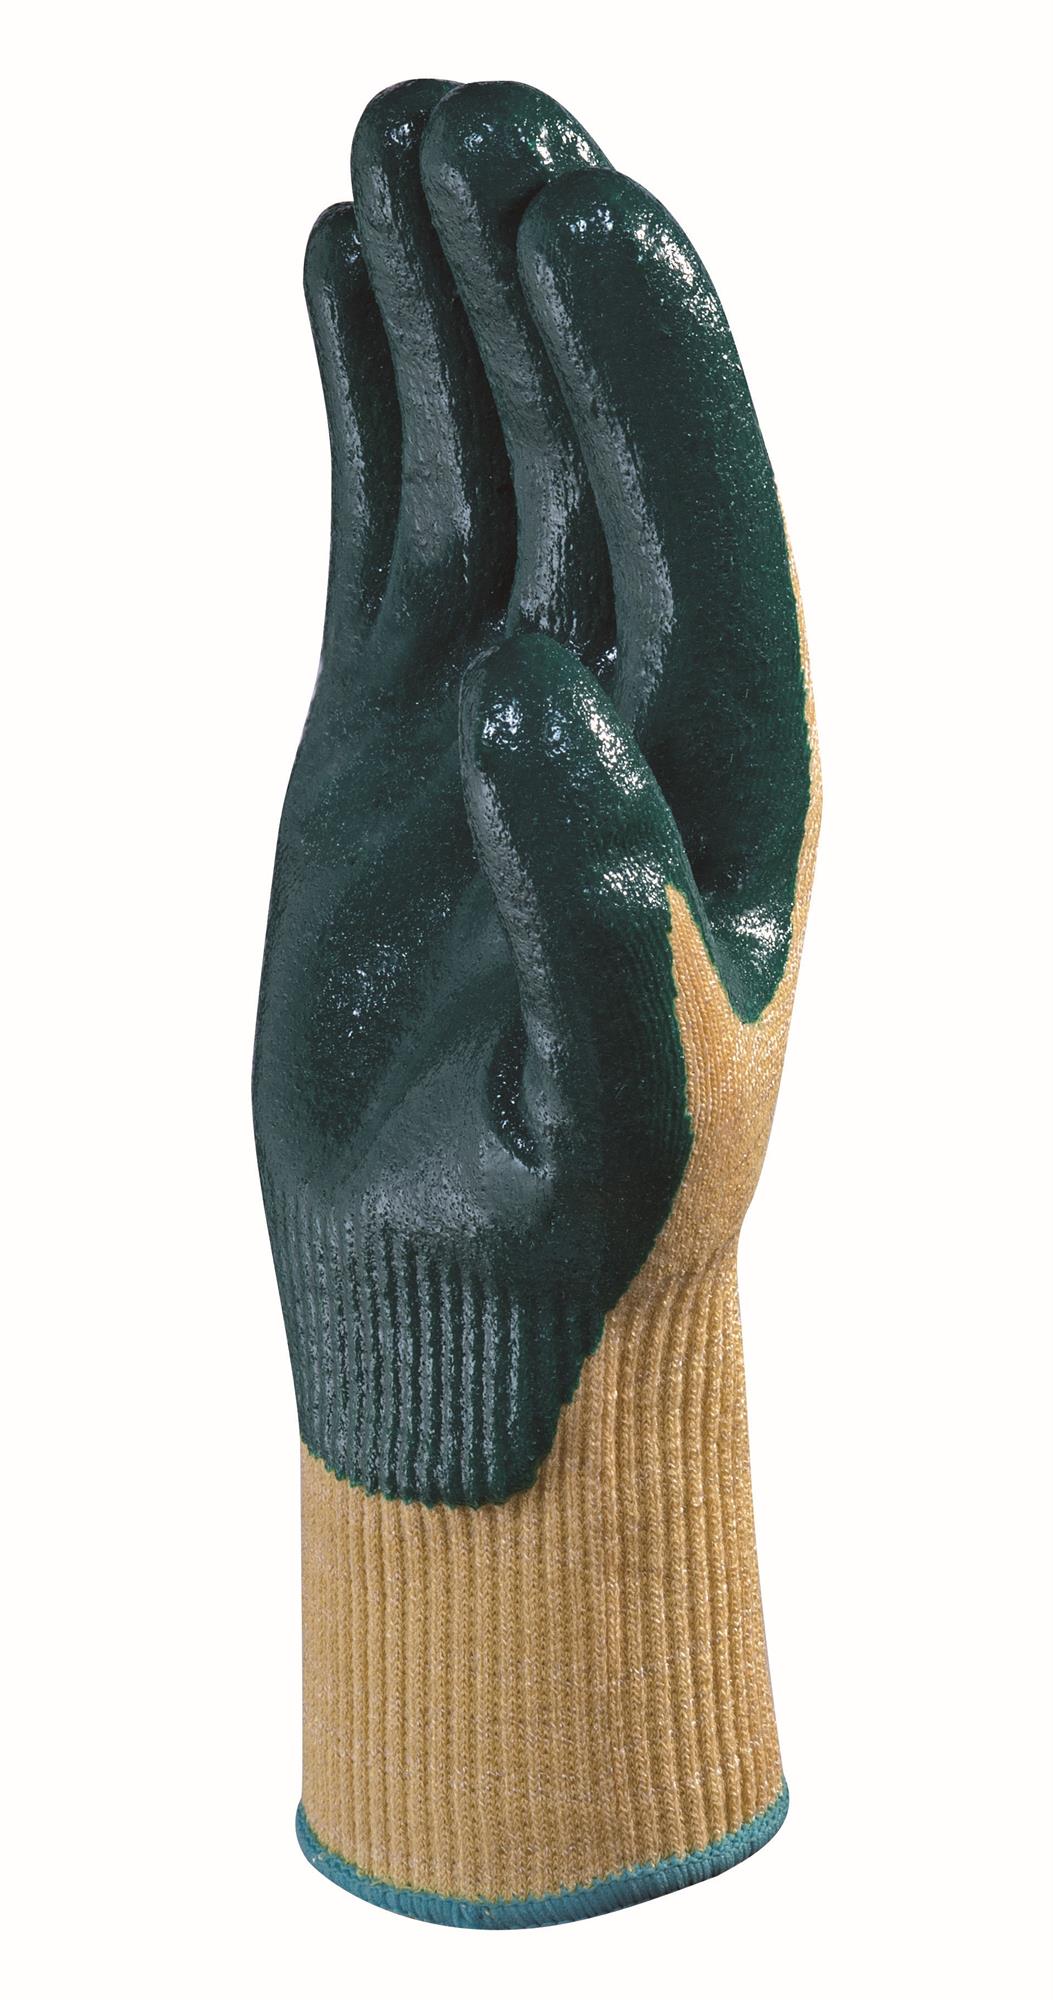 Delta Plus anti-cut level D green nitrile coated yellow knit glove #VENICUT57